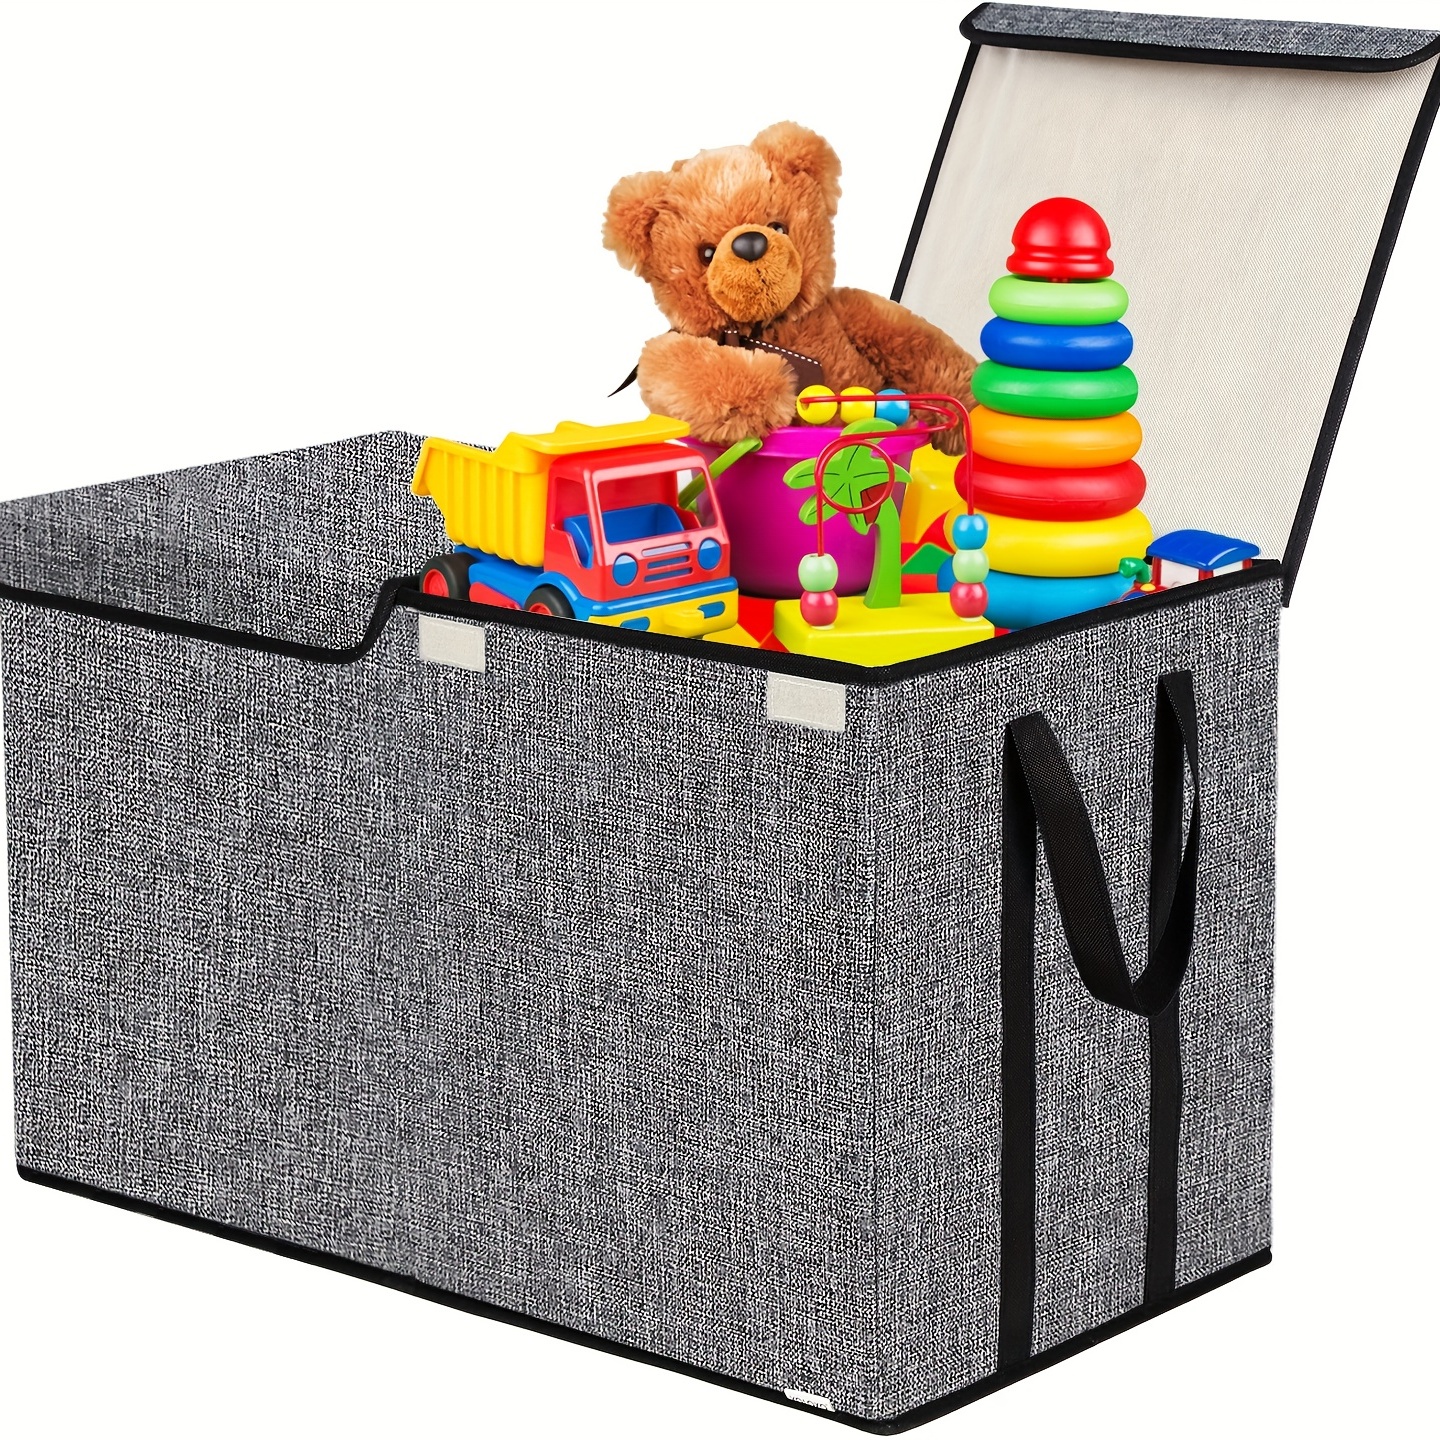 Xianrenge Large-play-mat-with-toy-storage-organizer,quick Collapsible  Storage Basket Bins-durable Oxford,zipper Lid-prize Box,reward Box,treasure  Ches